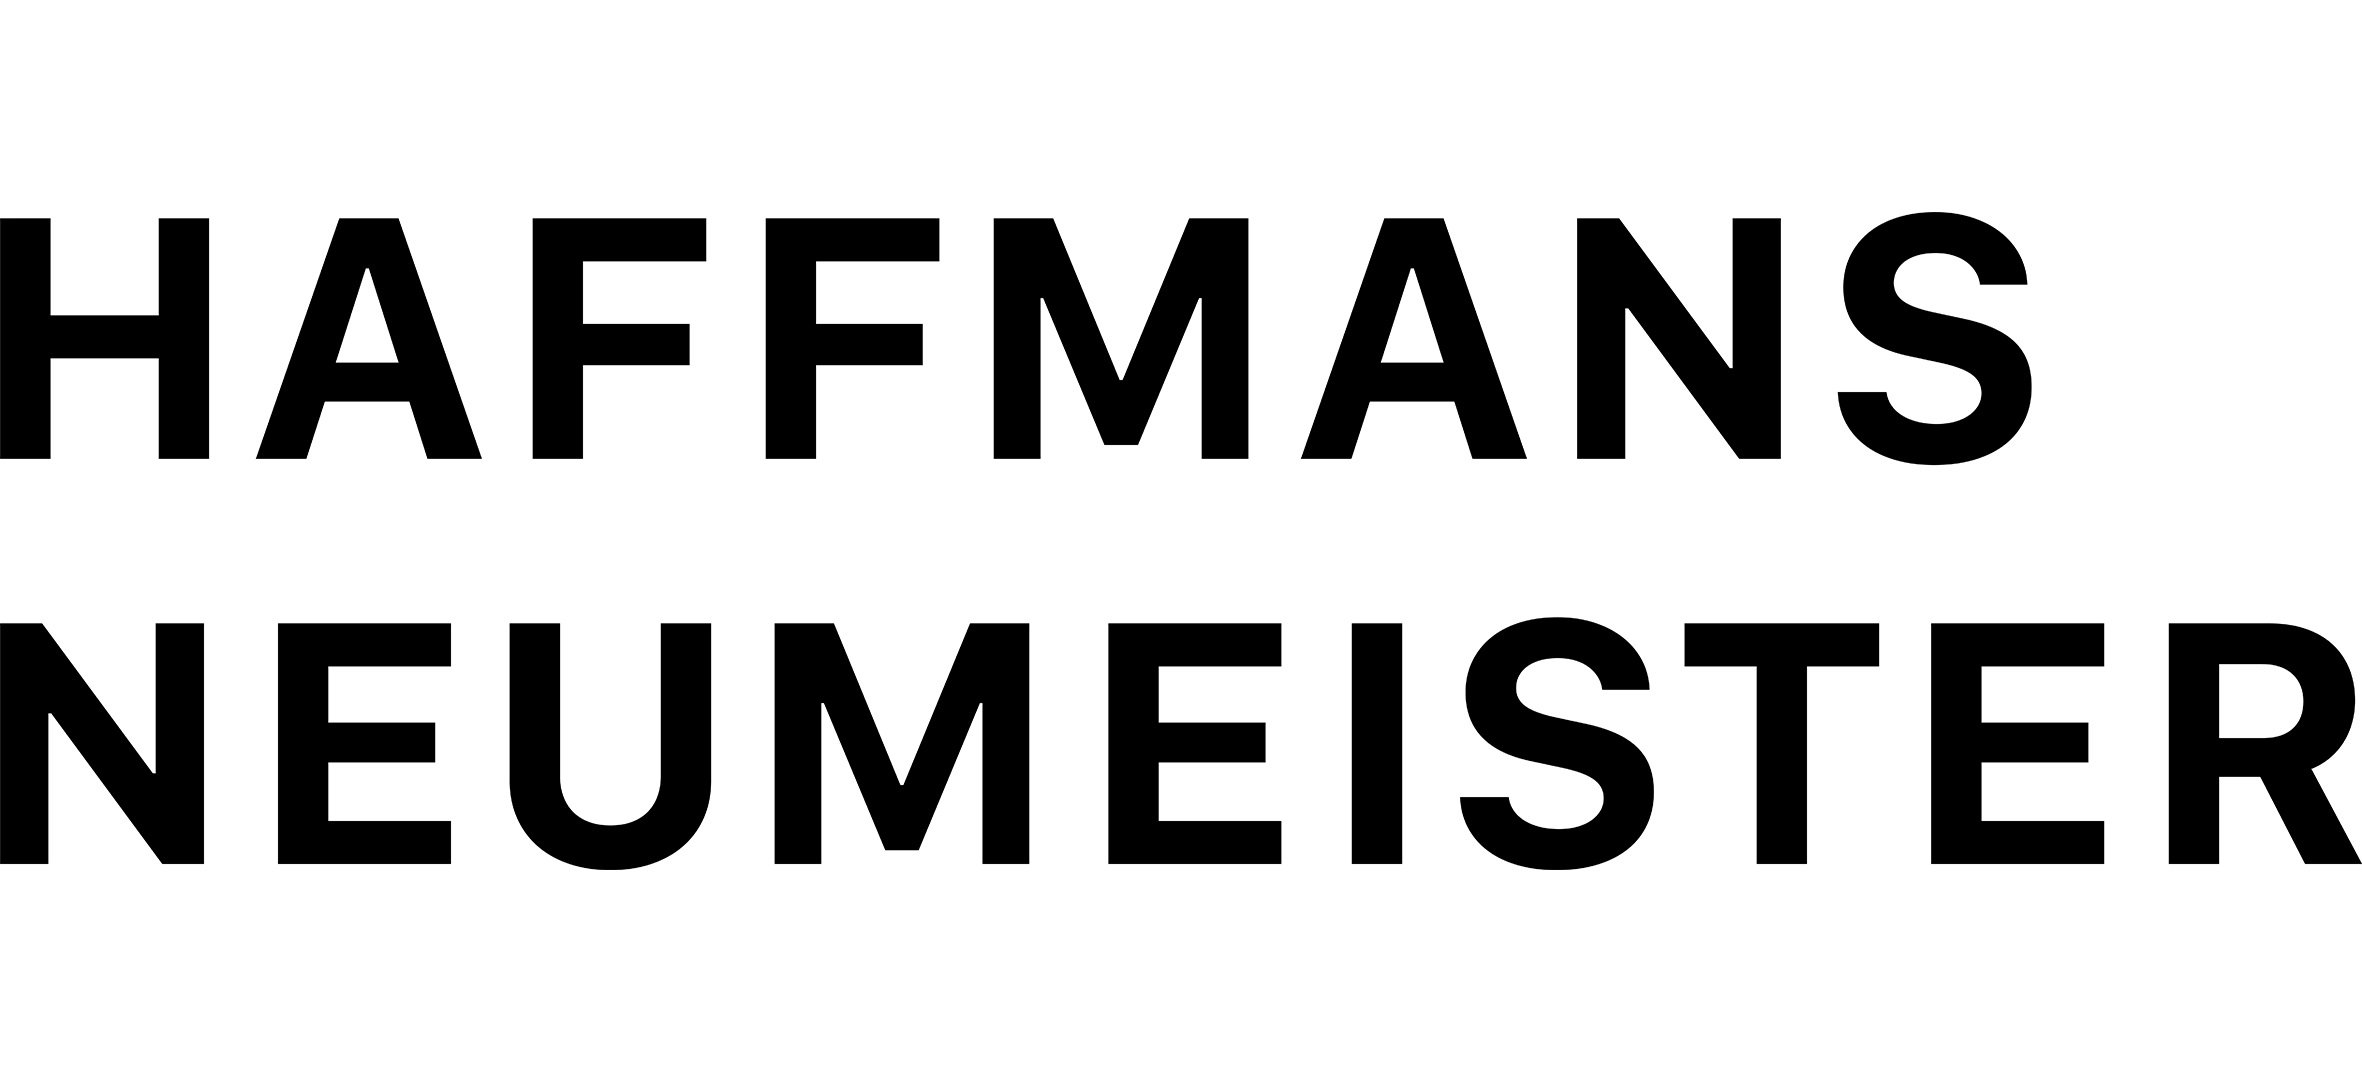 Haffmans-Neumeister